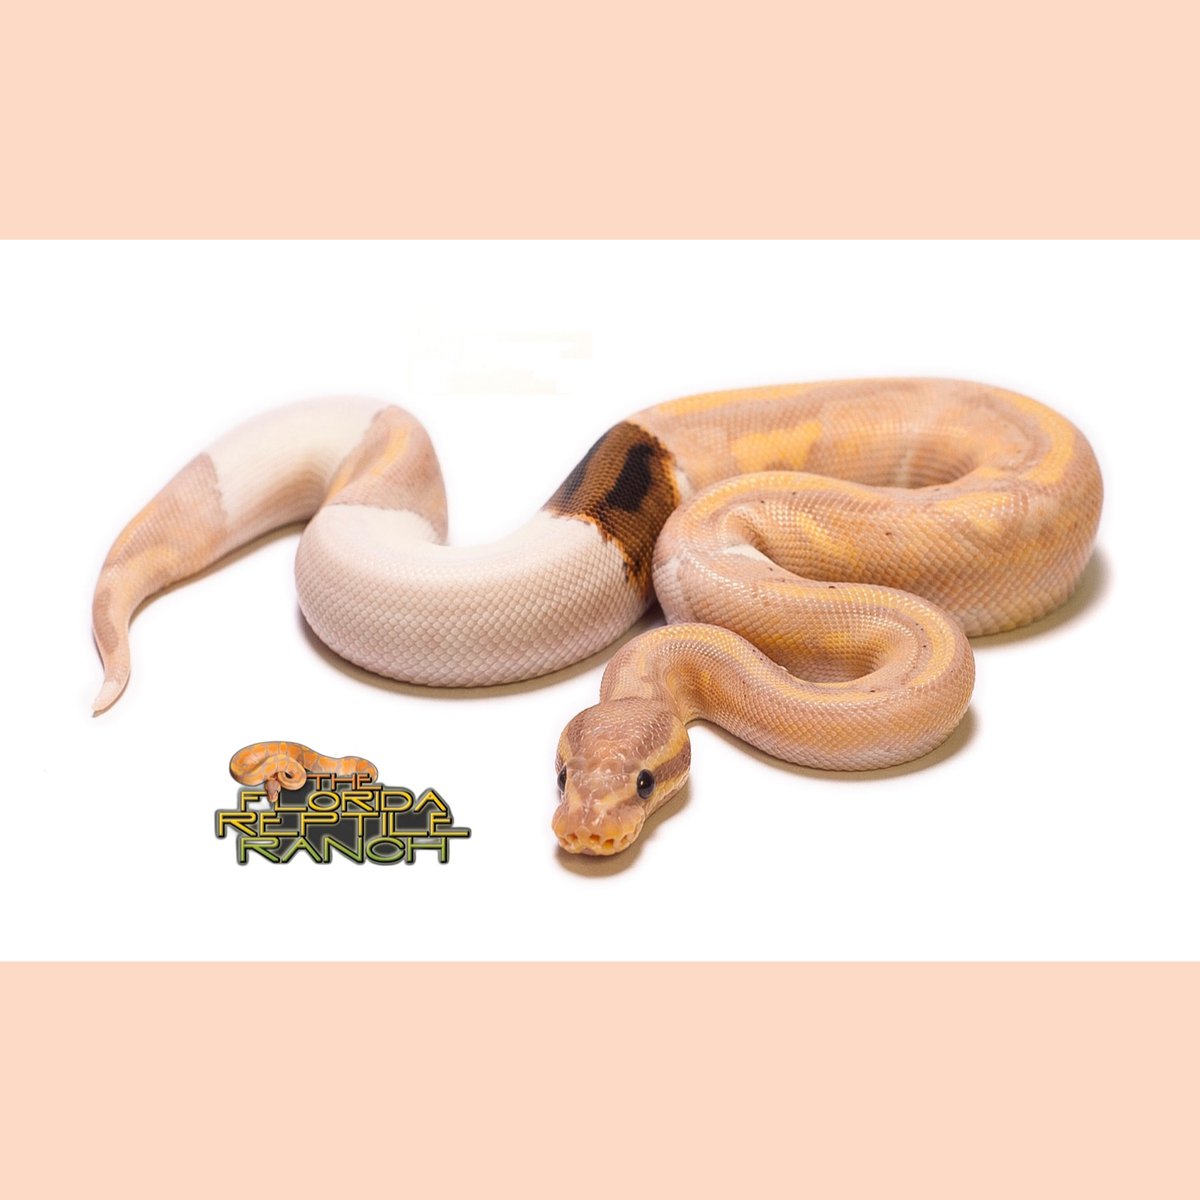 Che splendore! :-) Banana Pied Chimera Ball Python (Python regius). Foto: The Florida Reptile Ranch. #baby #snake #reptile #livingart #lareptile #lareptiles #breeding #ballpython #royalpython #pythonregius #livingartreptile #livingartreptiles